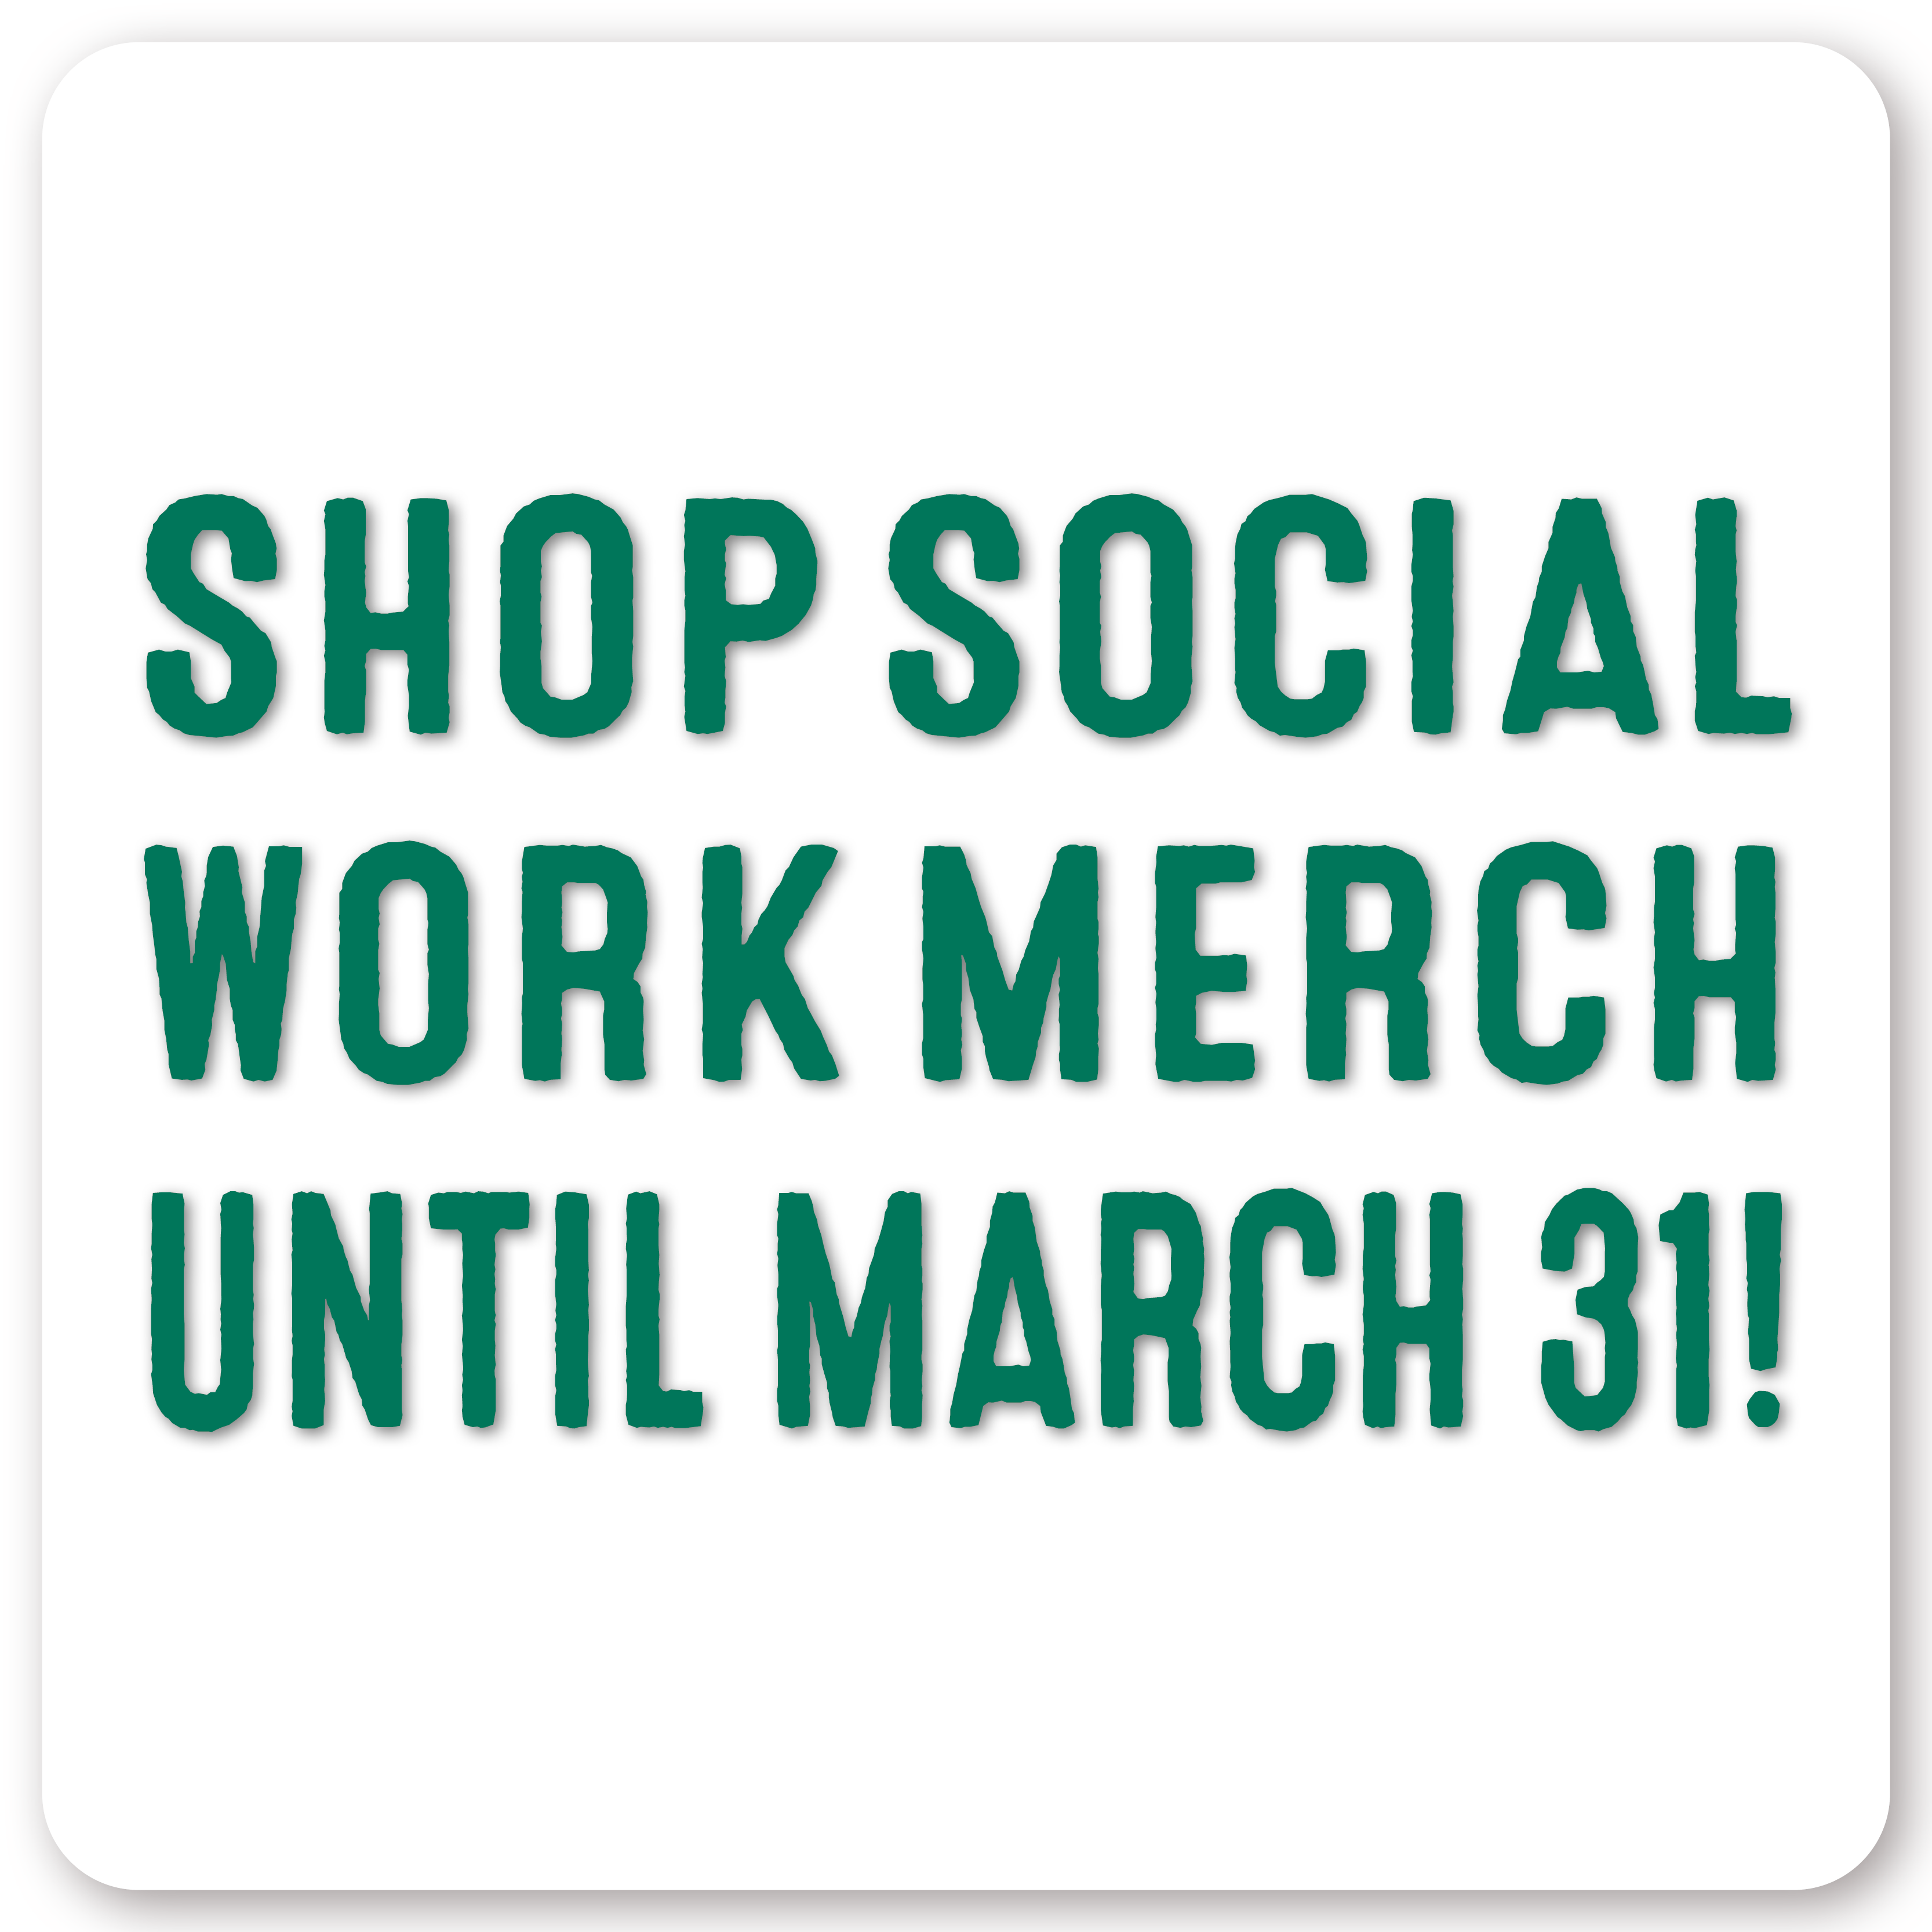 Shop social work merch until March 31!